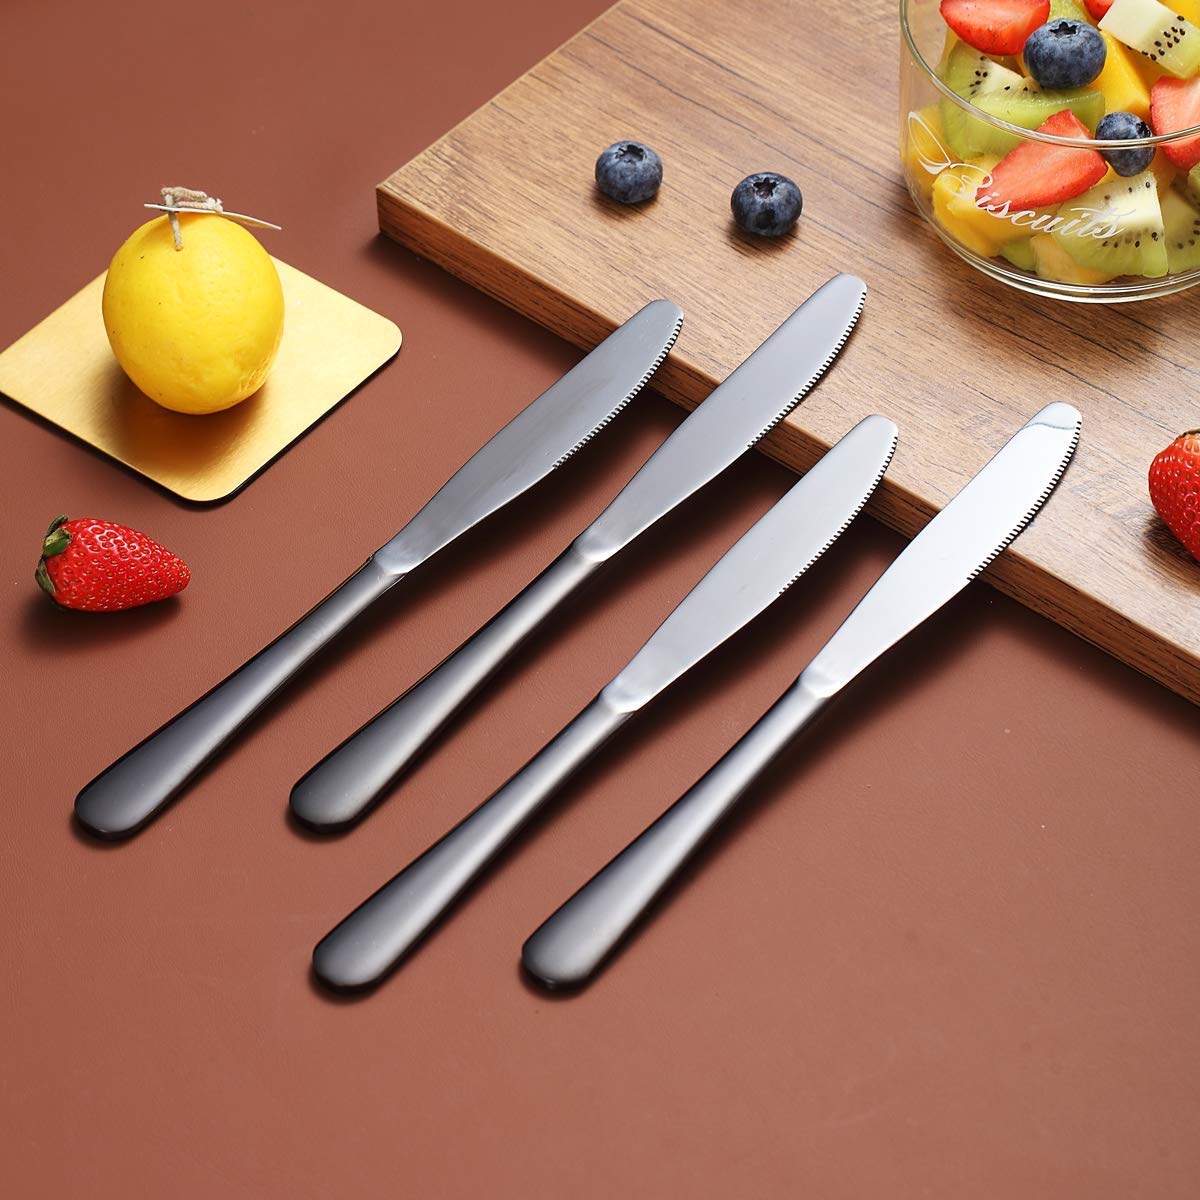 Berglander Black Dinner Knives Set Of 4, Stainless Steel Titanium Plating Shiny Black Dinner Knife, Butter Knife Spreader Table Knives Sturdy And Dishwasher Safe